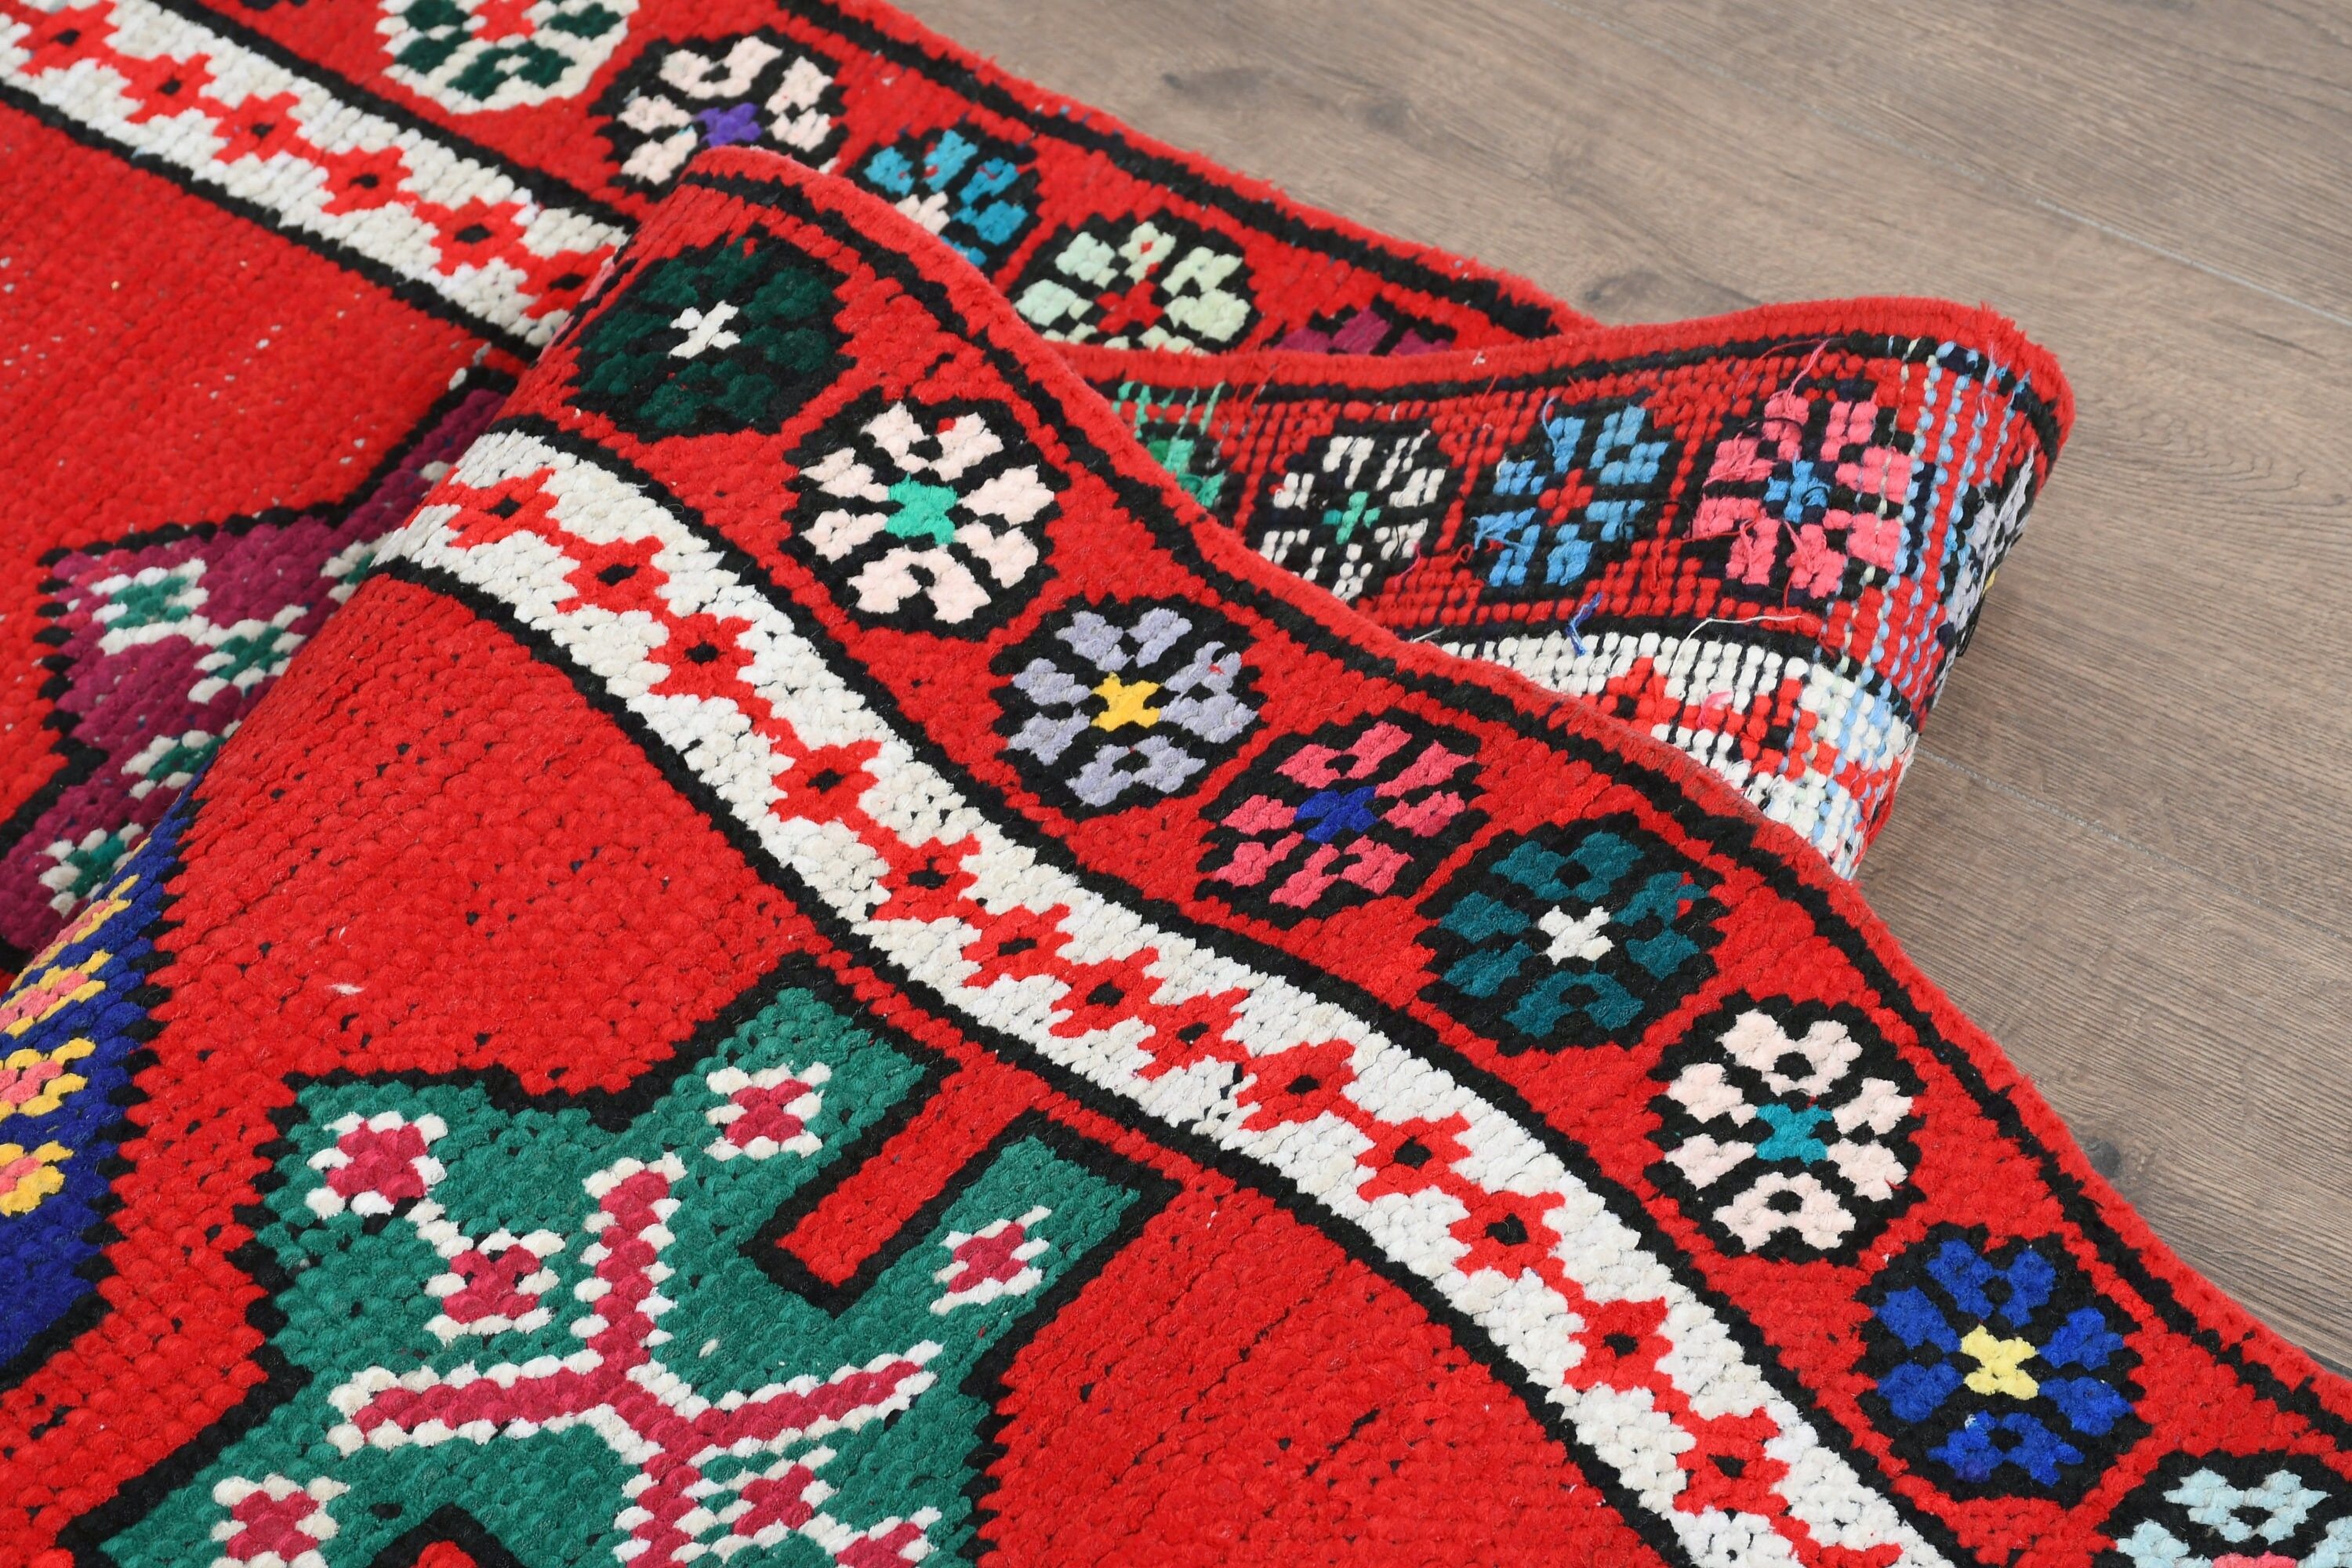 Anatolian Rug, Rugs for Runner, Turkish Rugs, Corridor Rug, Cool Rug, Vintage Rugs, Bohemian Rug, Red  2.7x13 ft Runner Rug